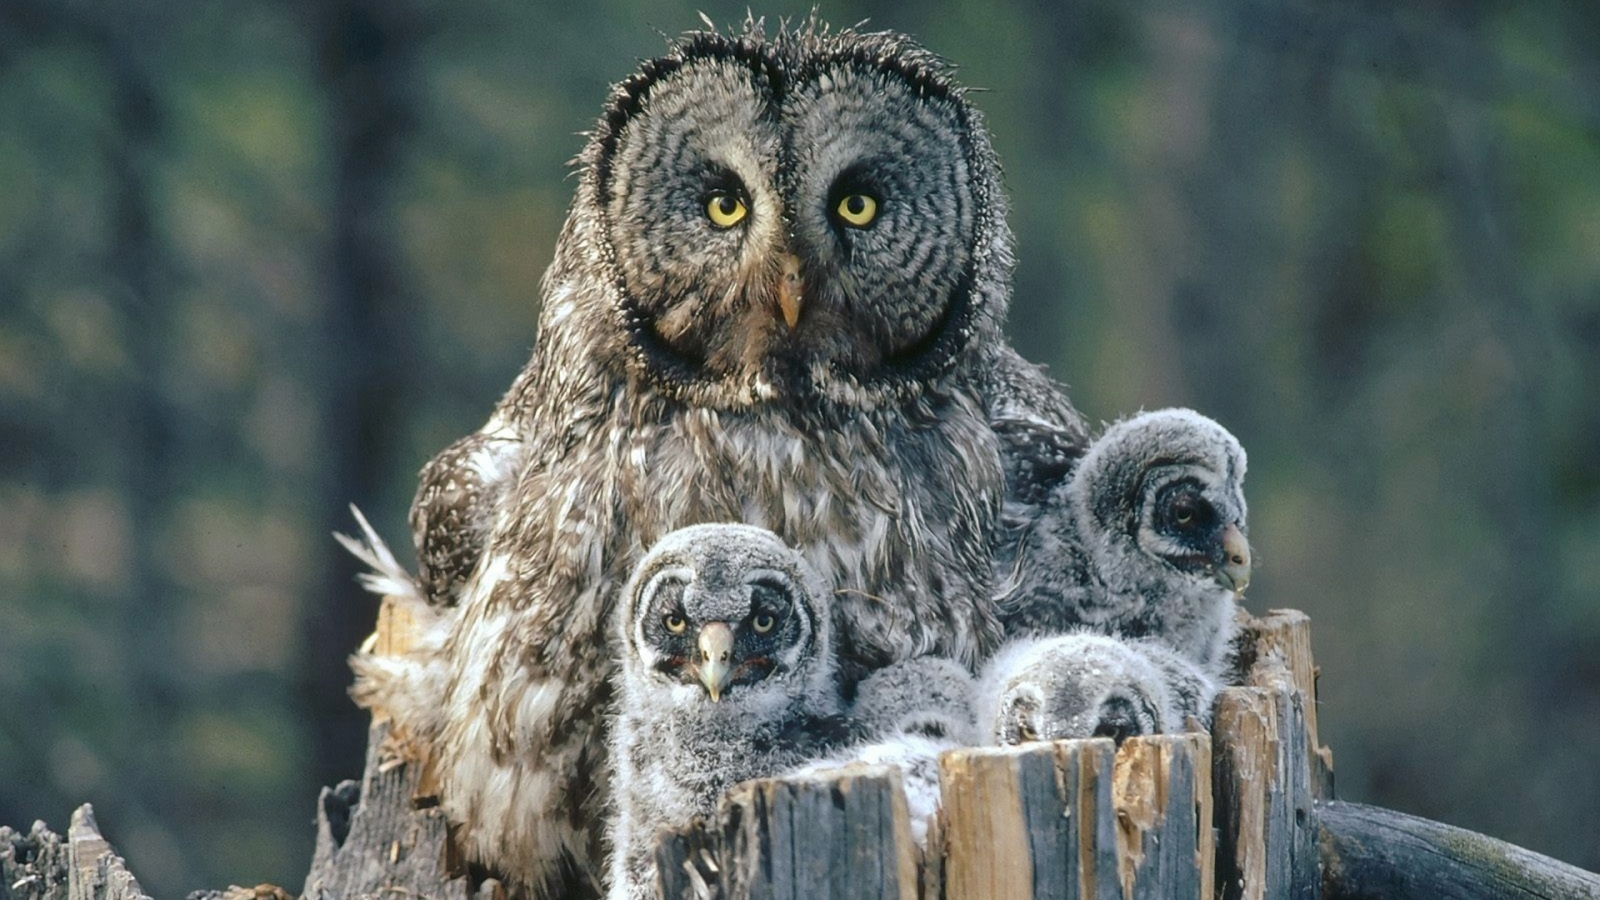 Owl Family Background for 1600 x 900 HDTV resolution